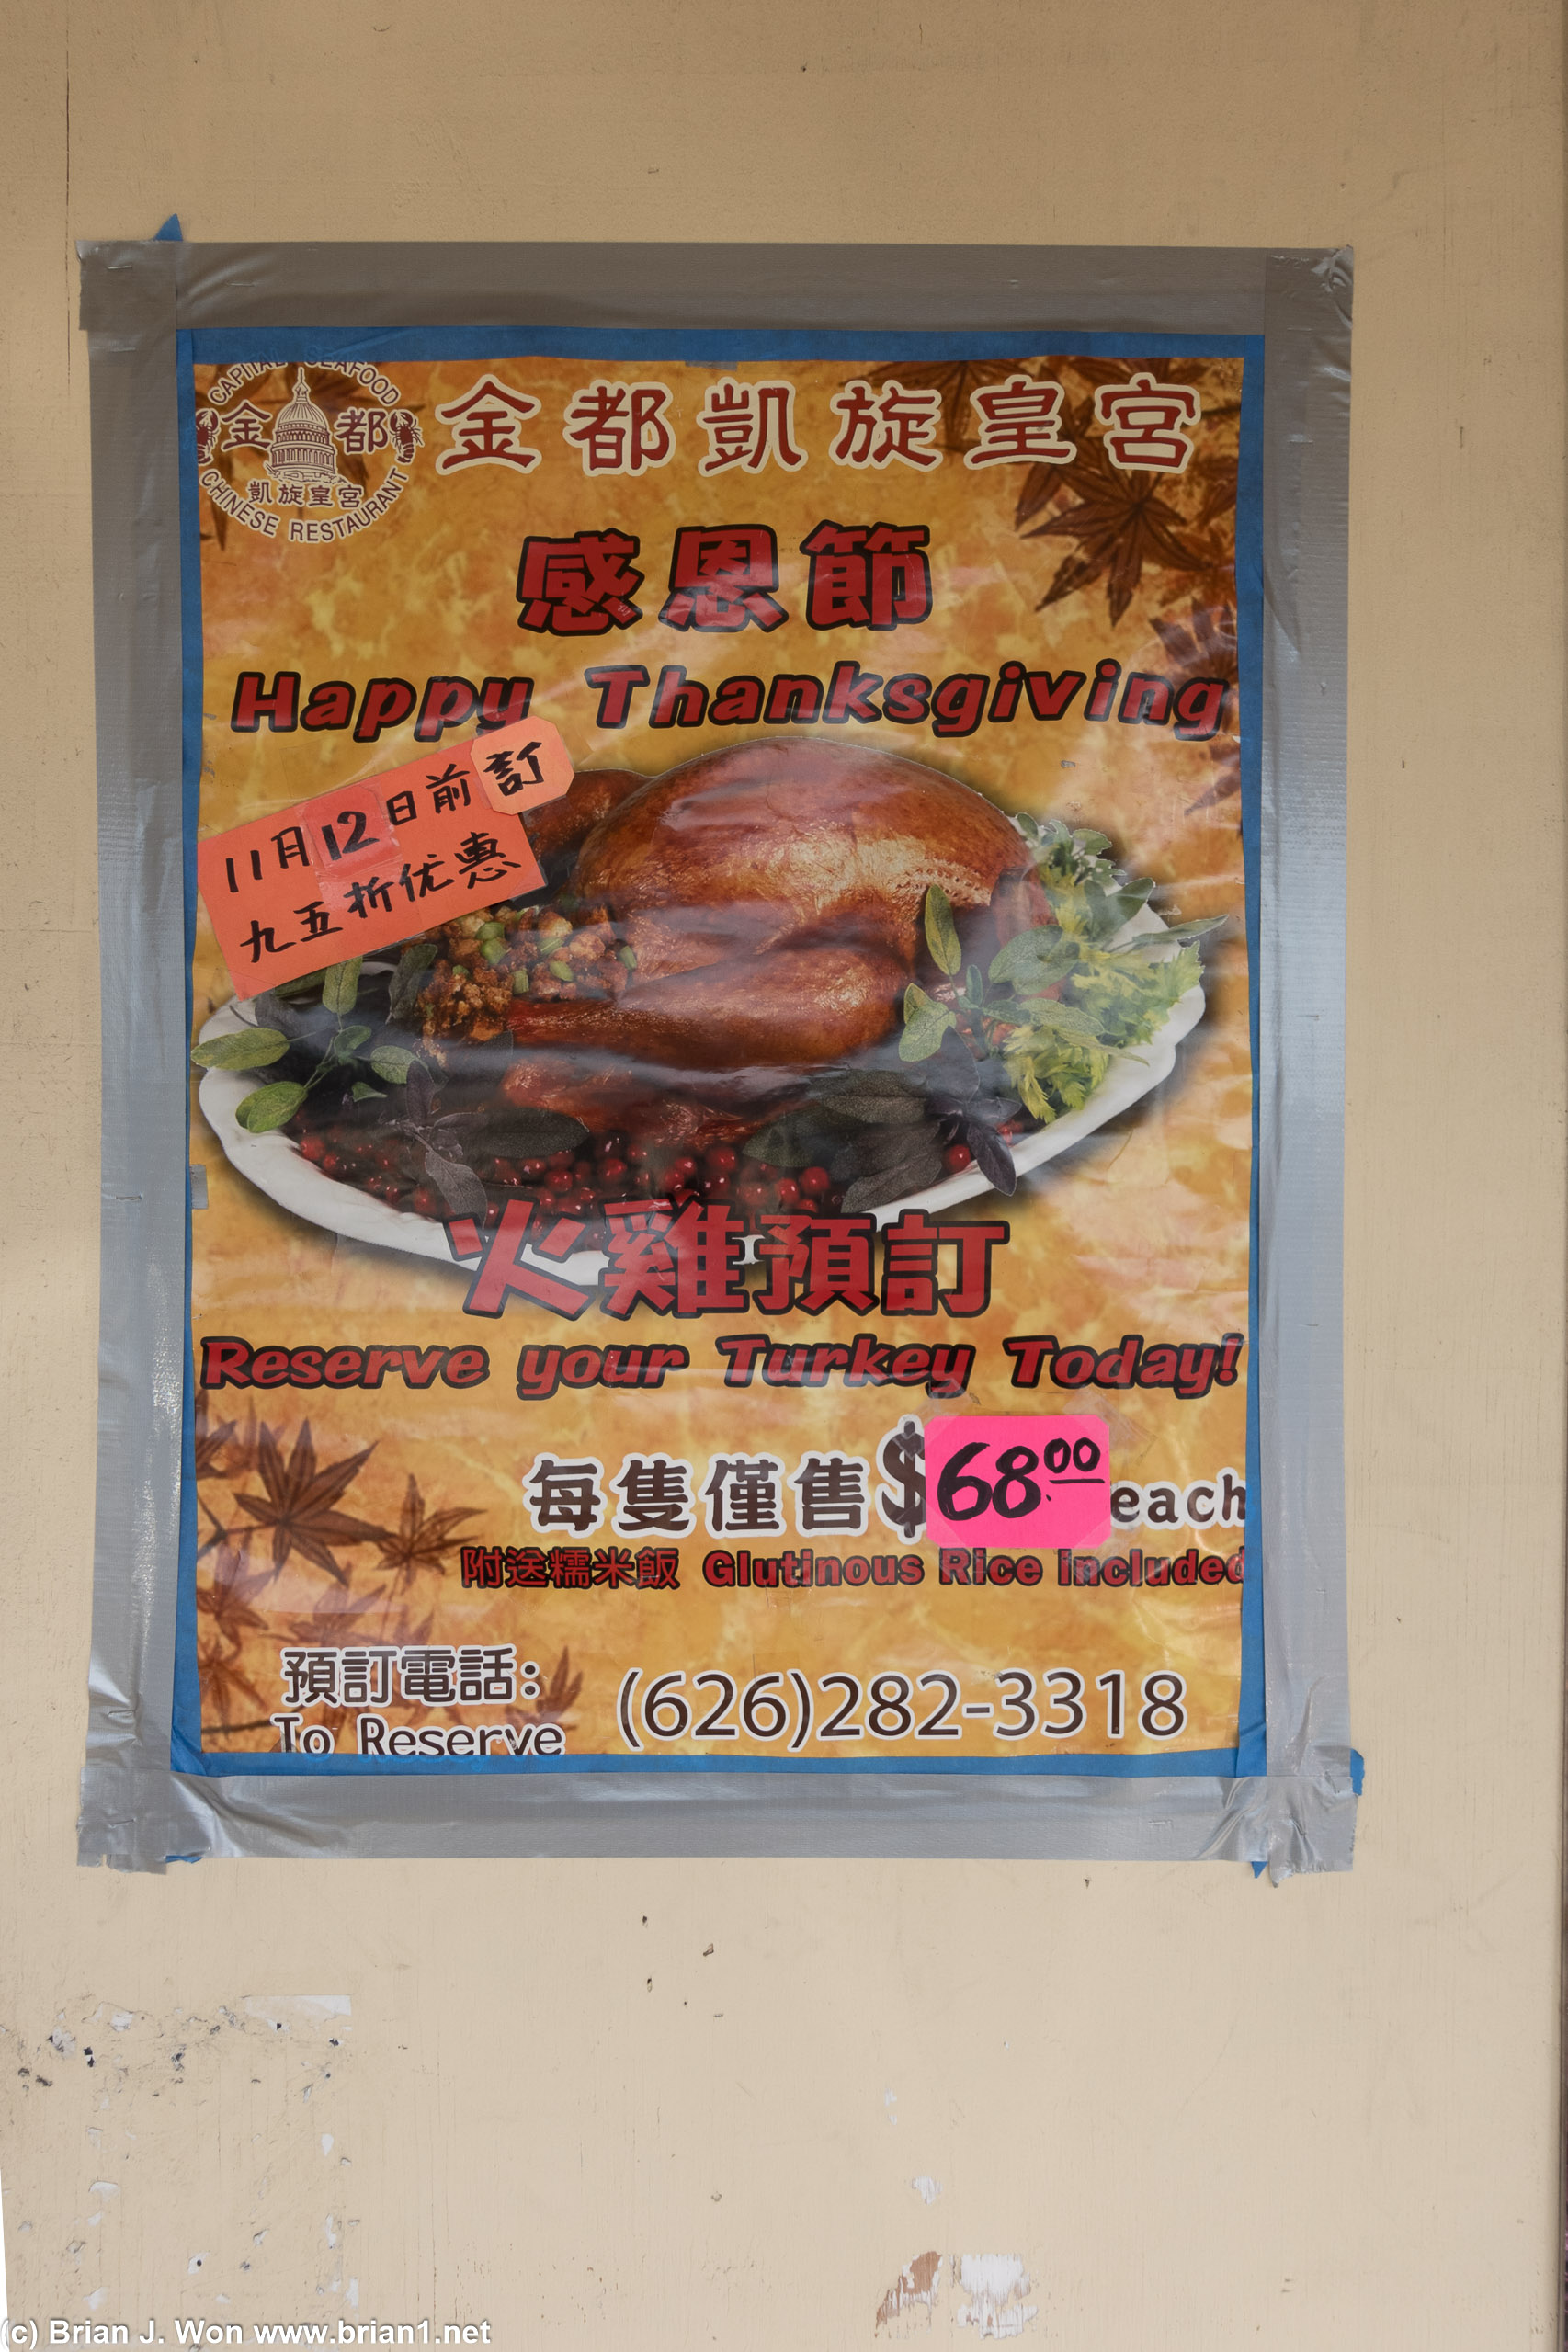 Even Chinese restaurants advertise Thanksgiving turkey.